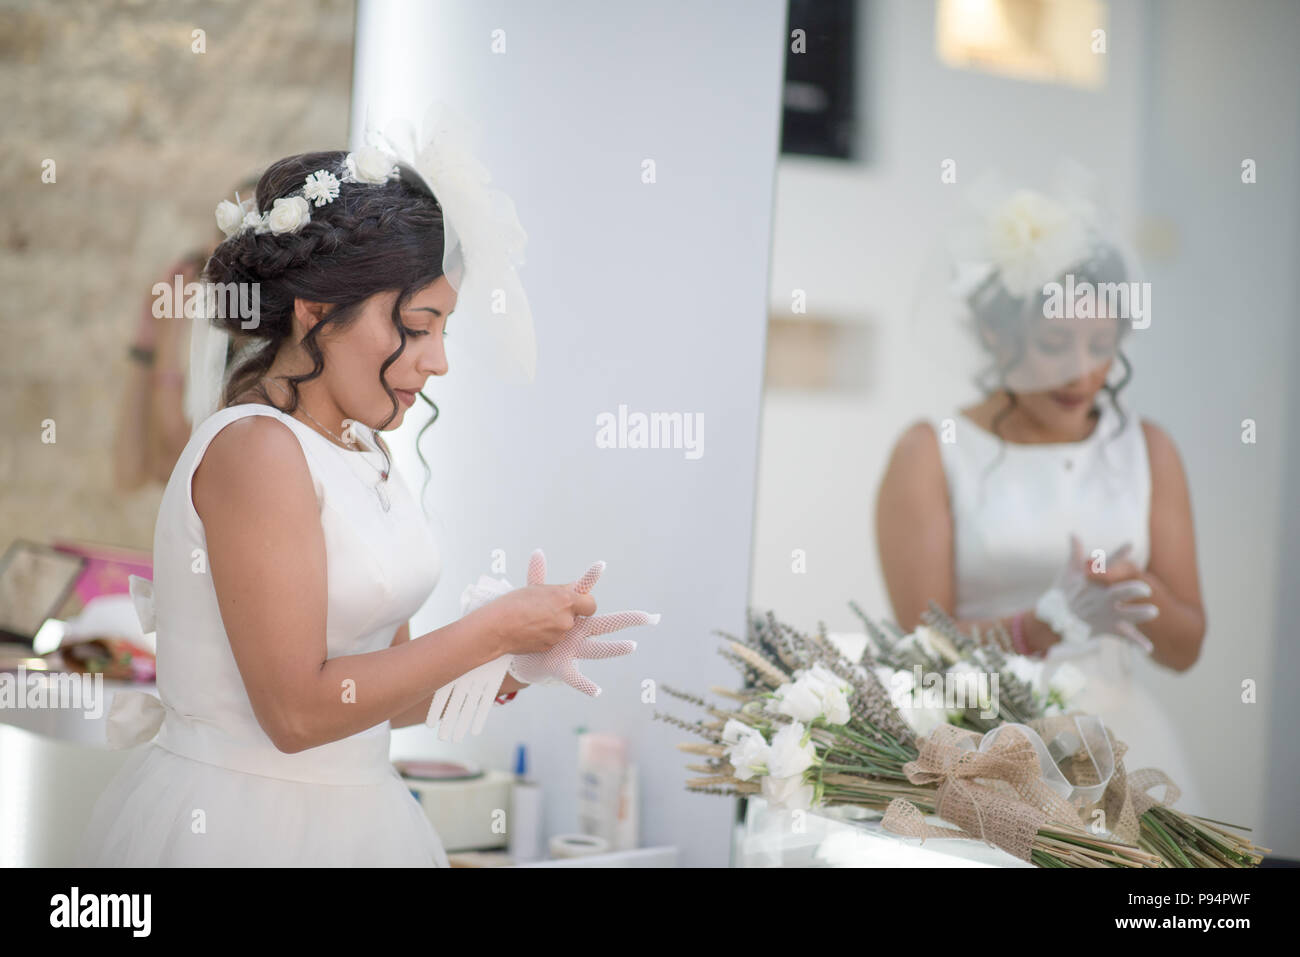 Bride Preparing For The Wedding Ceremony Make Up Hair Dresser